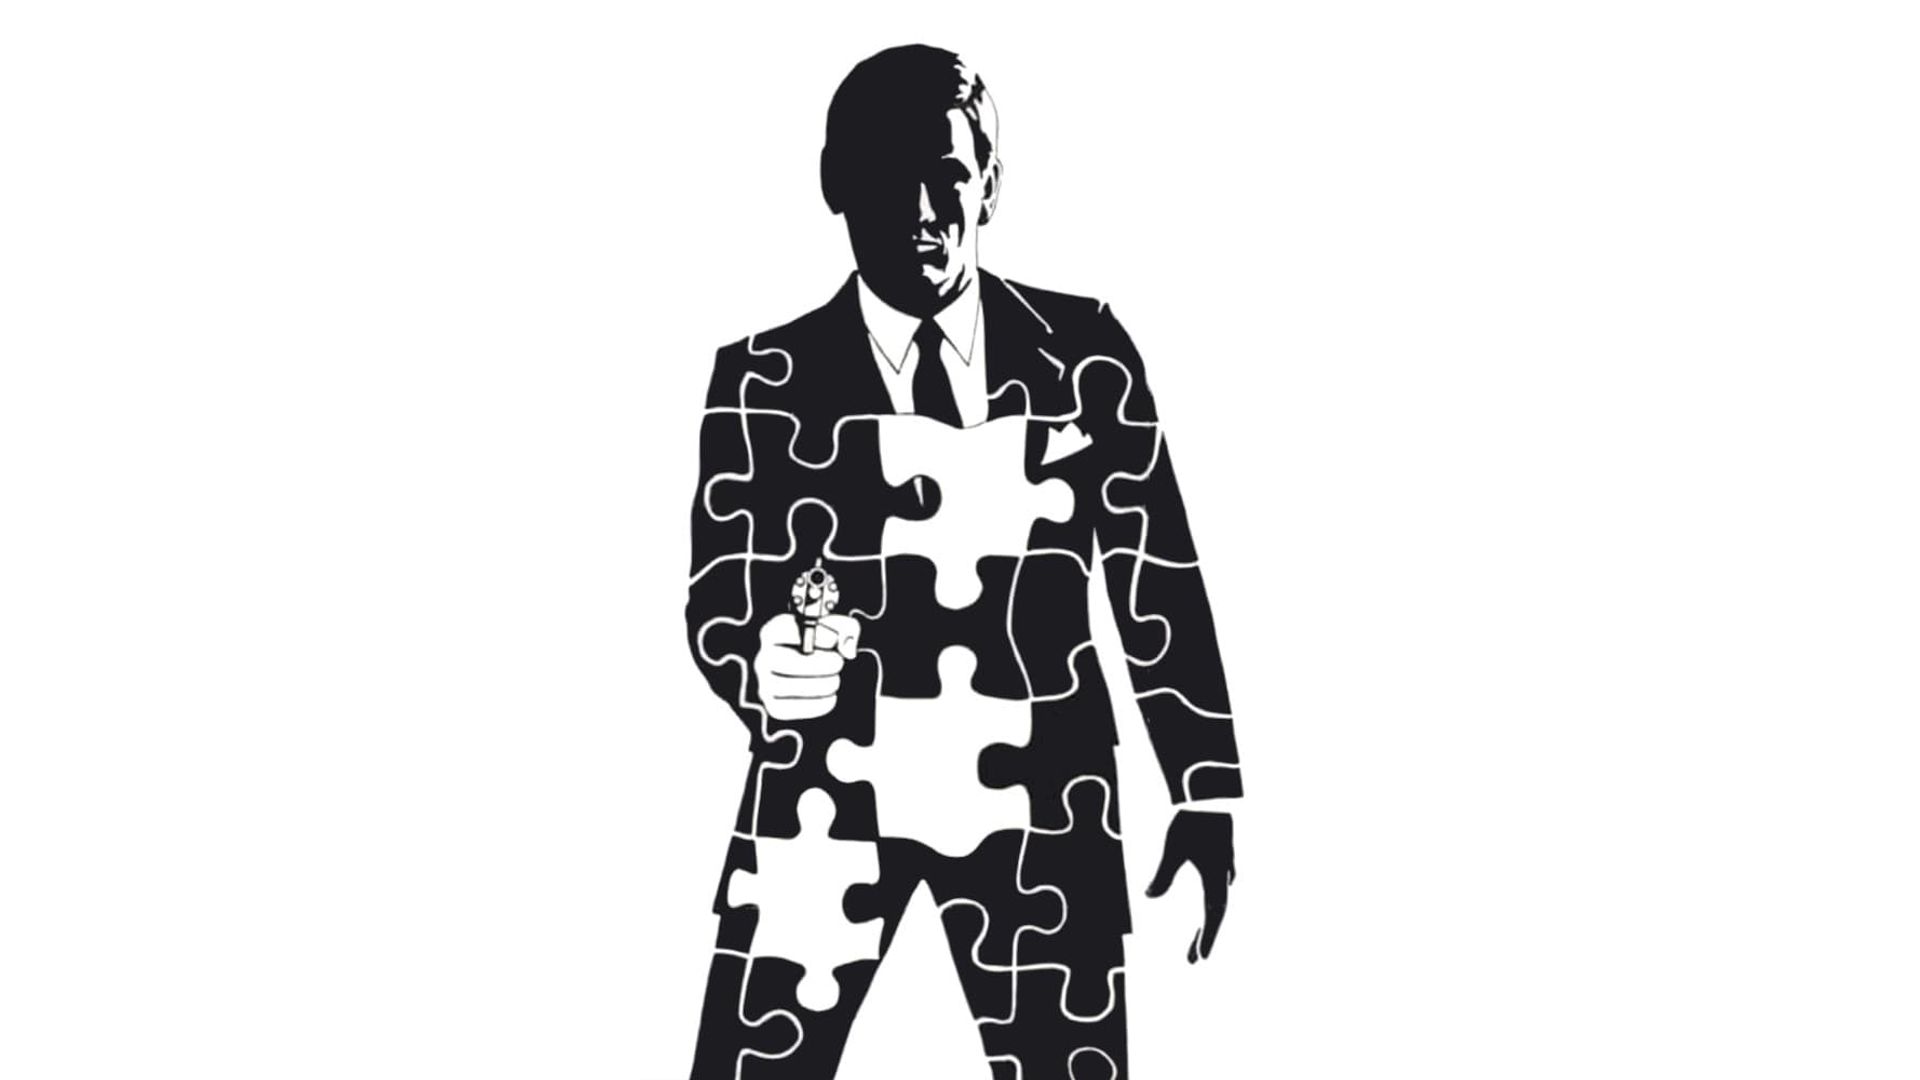 The Jigsaw Man background